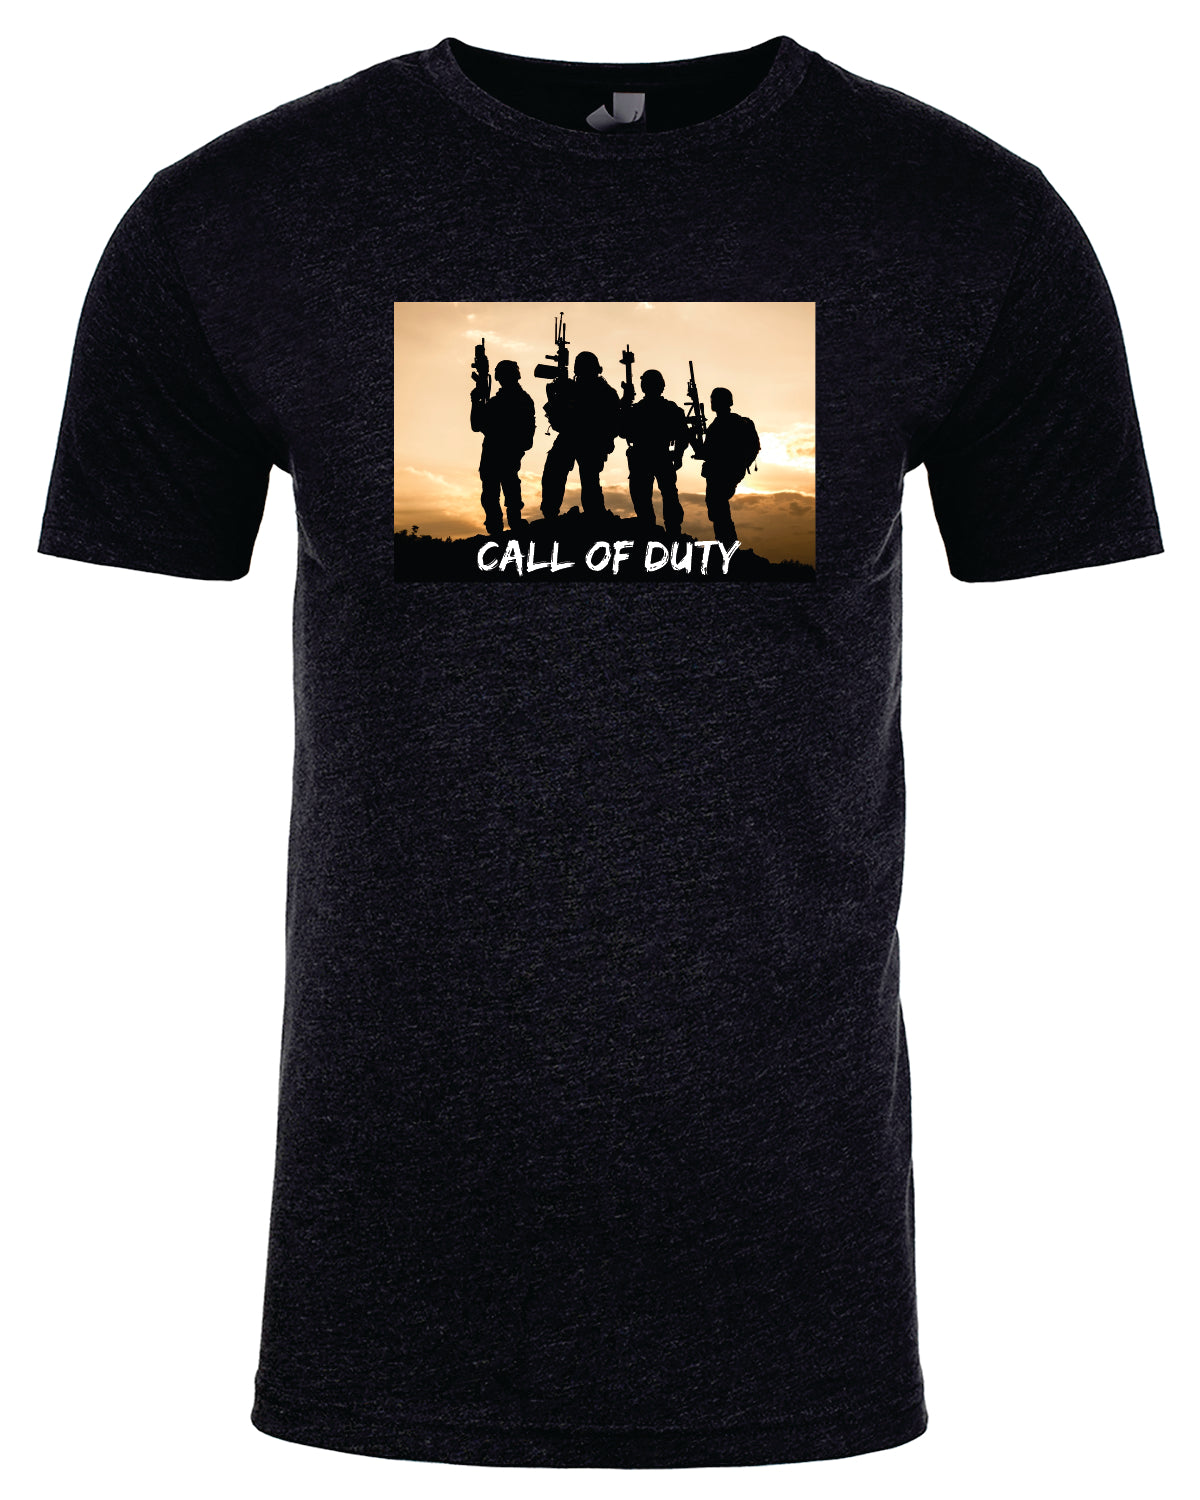 Call of Duty T-shirt